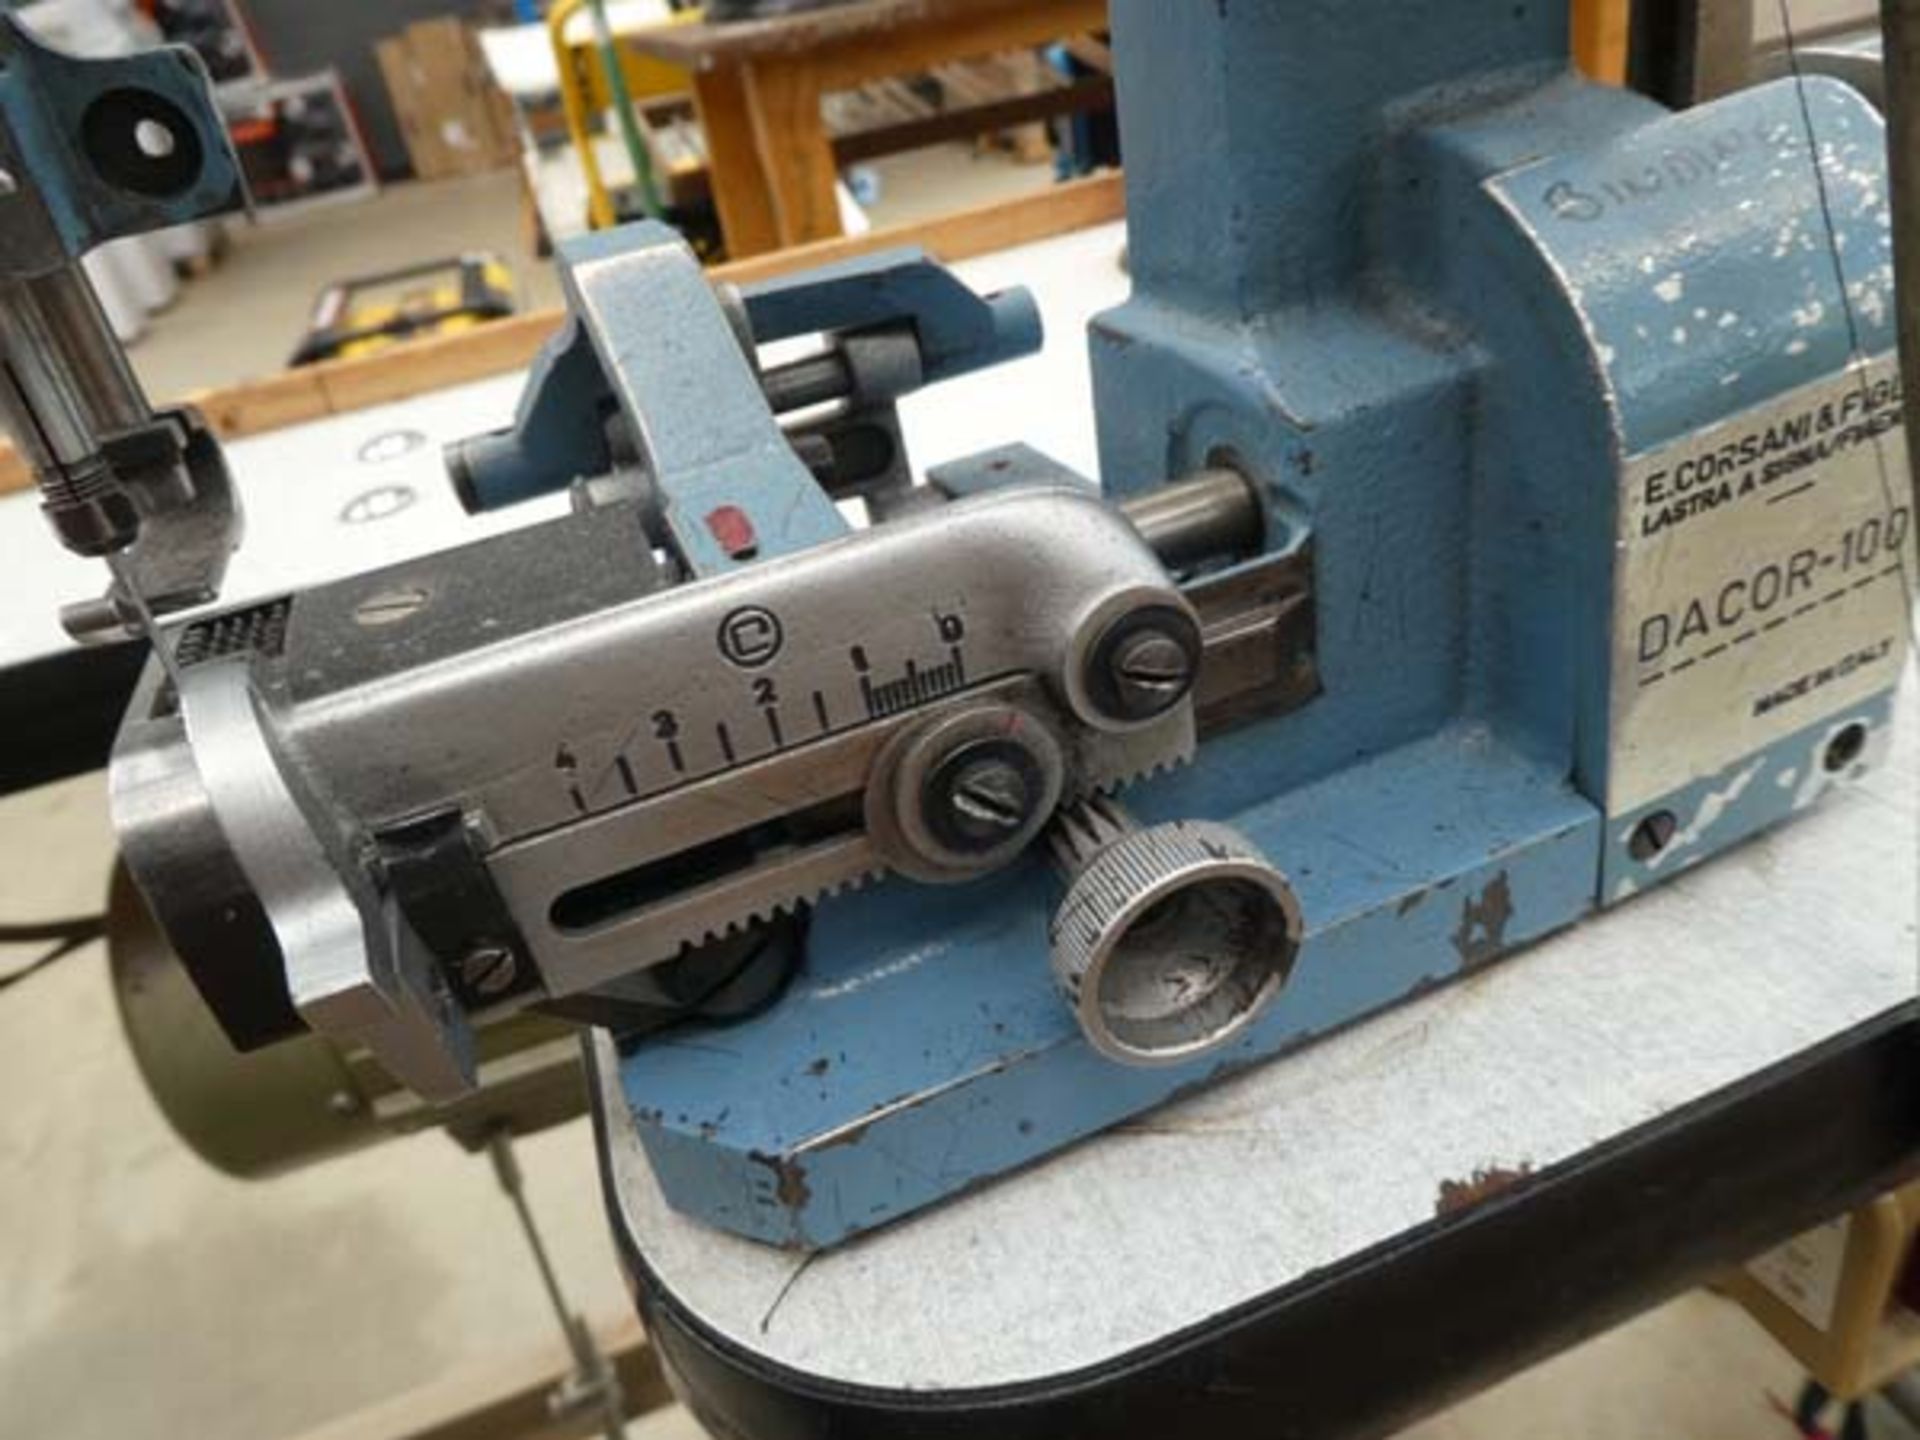 Ecorsani specialist professional sewing machine - Image 3 of 4